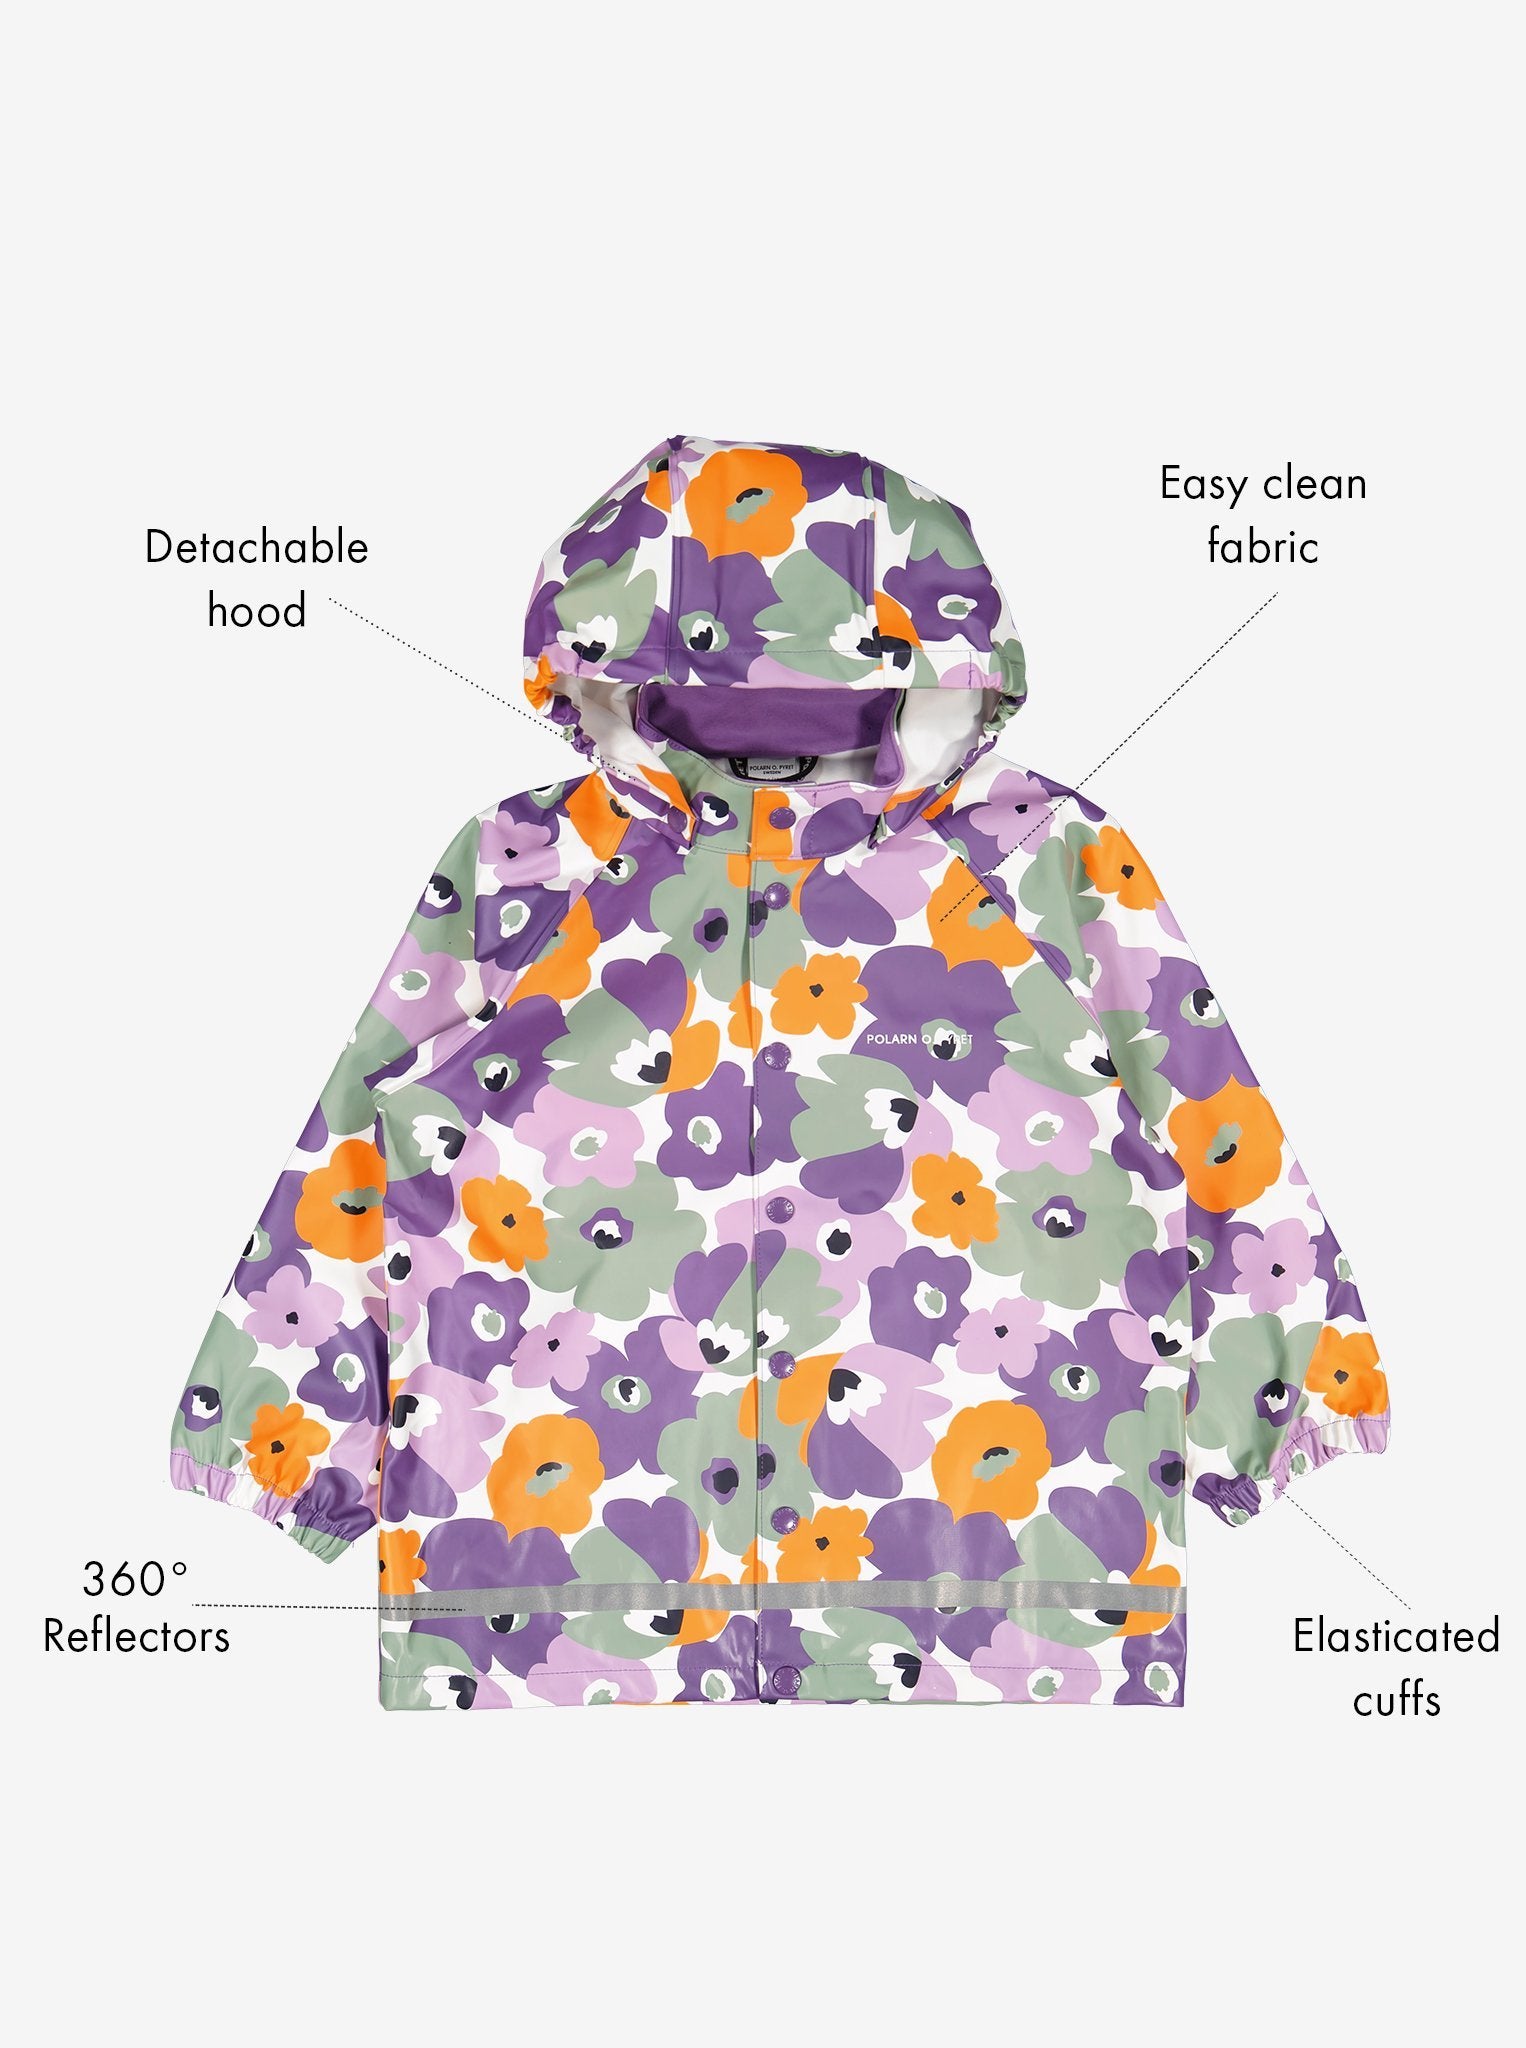 Floral Kids Waterproof Rain Coat from Polarn O. Pyret Kidswear. Raincoats for kids floral pattern